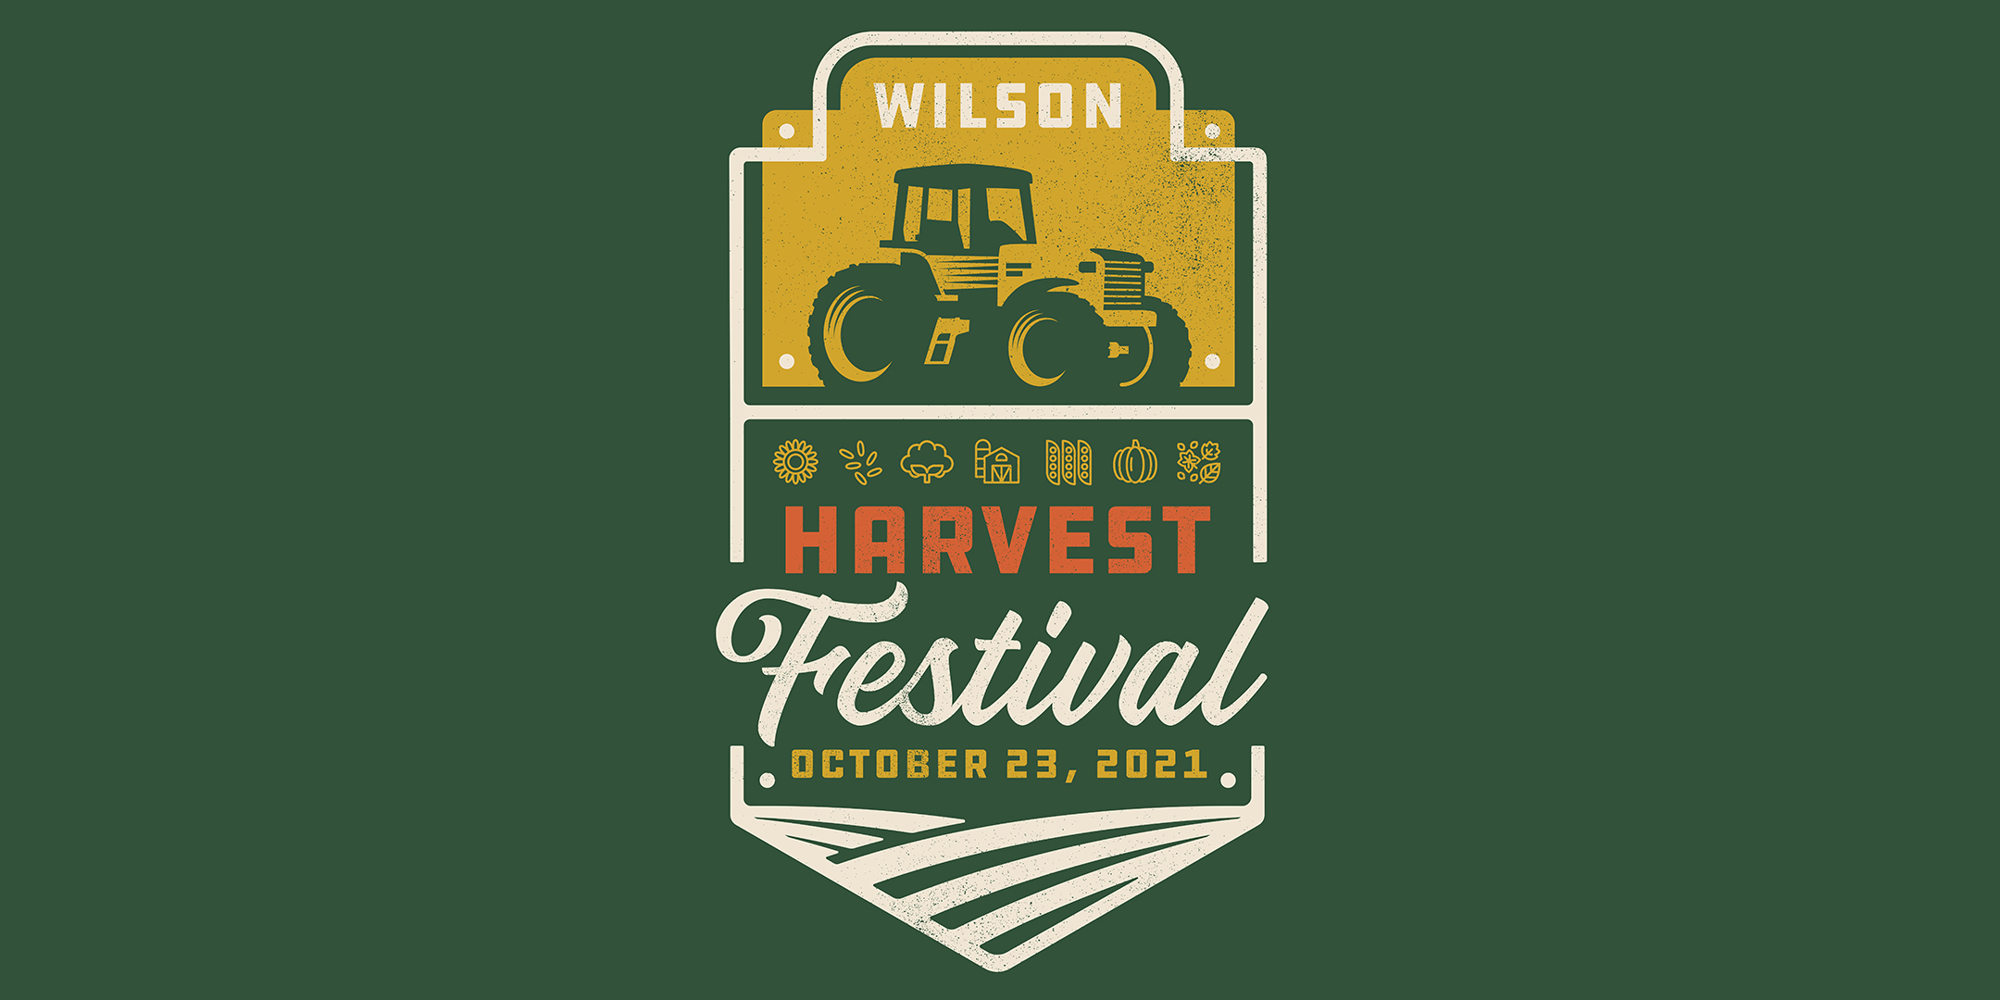 Wilson Harvest Festival promotional image